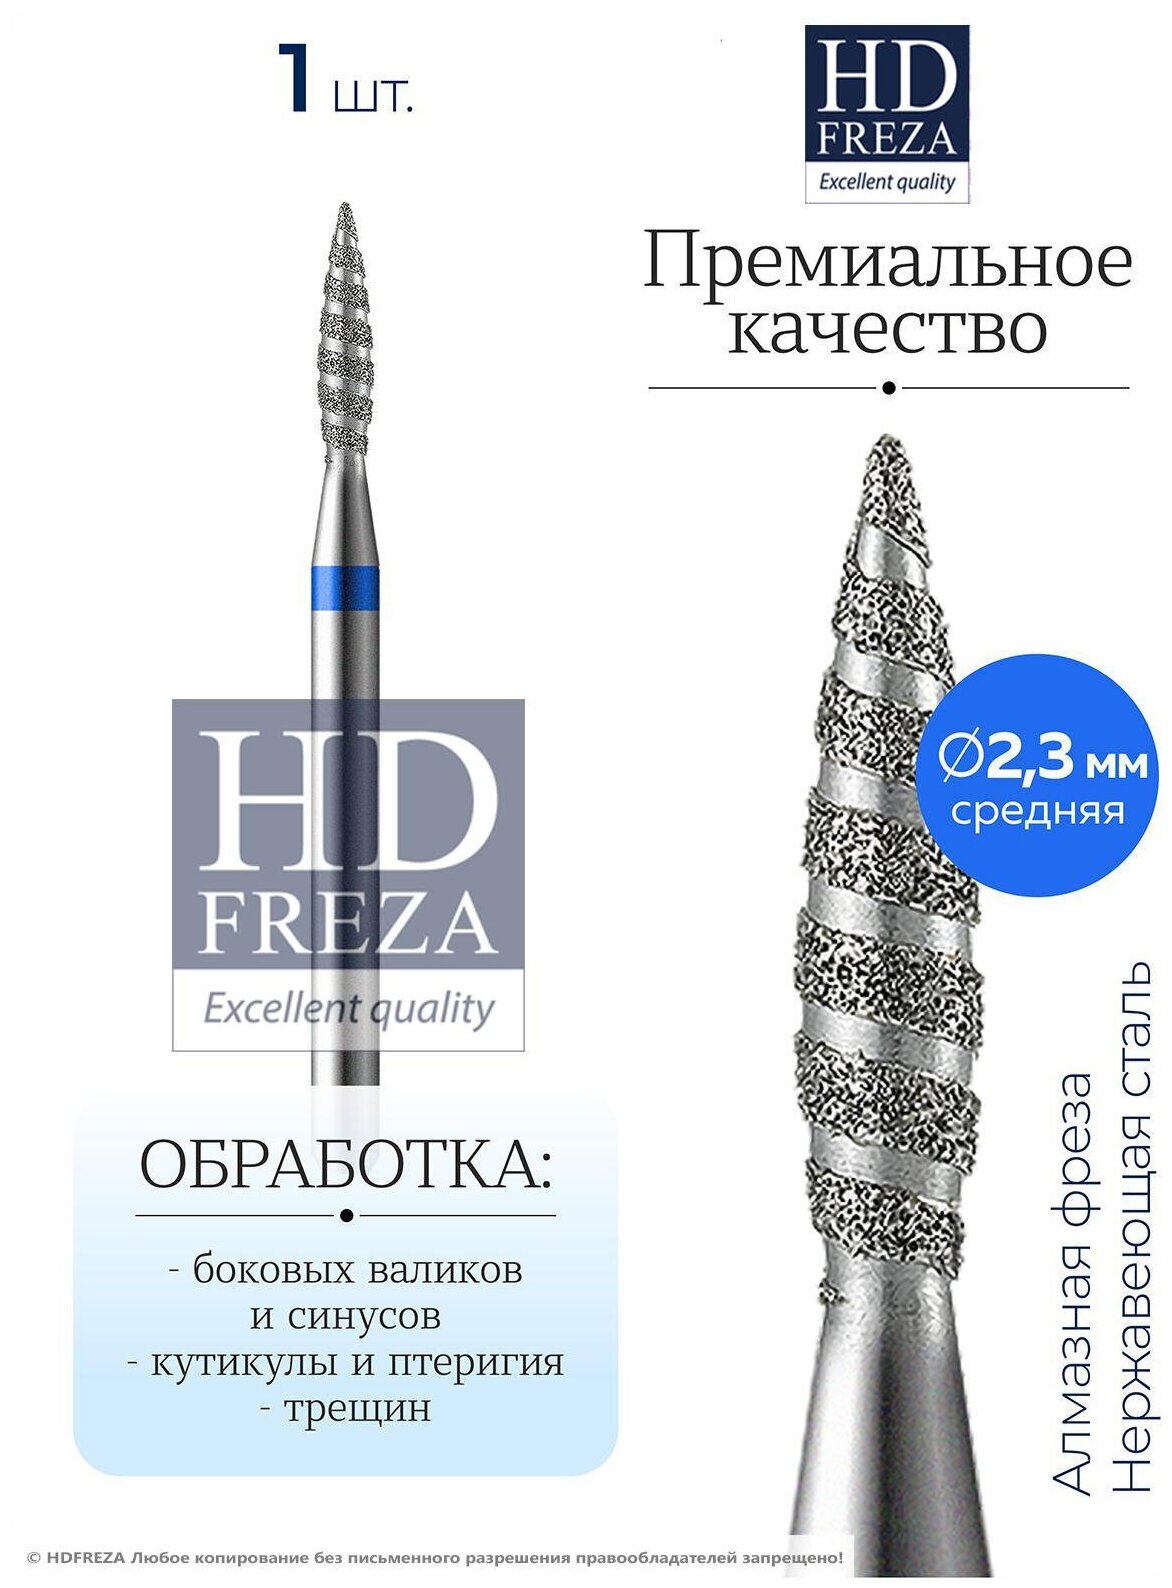 HDFREZA Фреза для маникюра и педикюра алмазная 804 243 524 023 Средняя синяя торнадо d-2.3